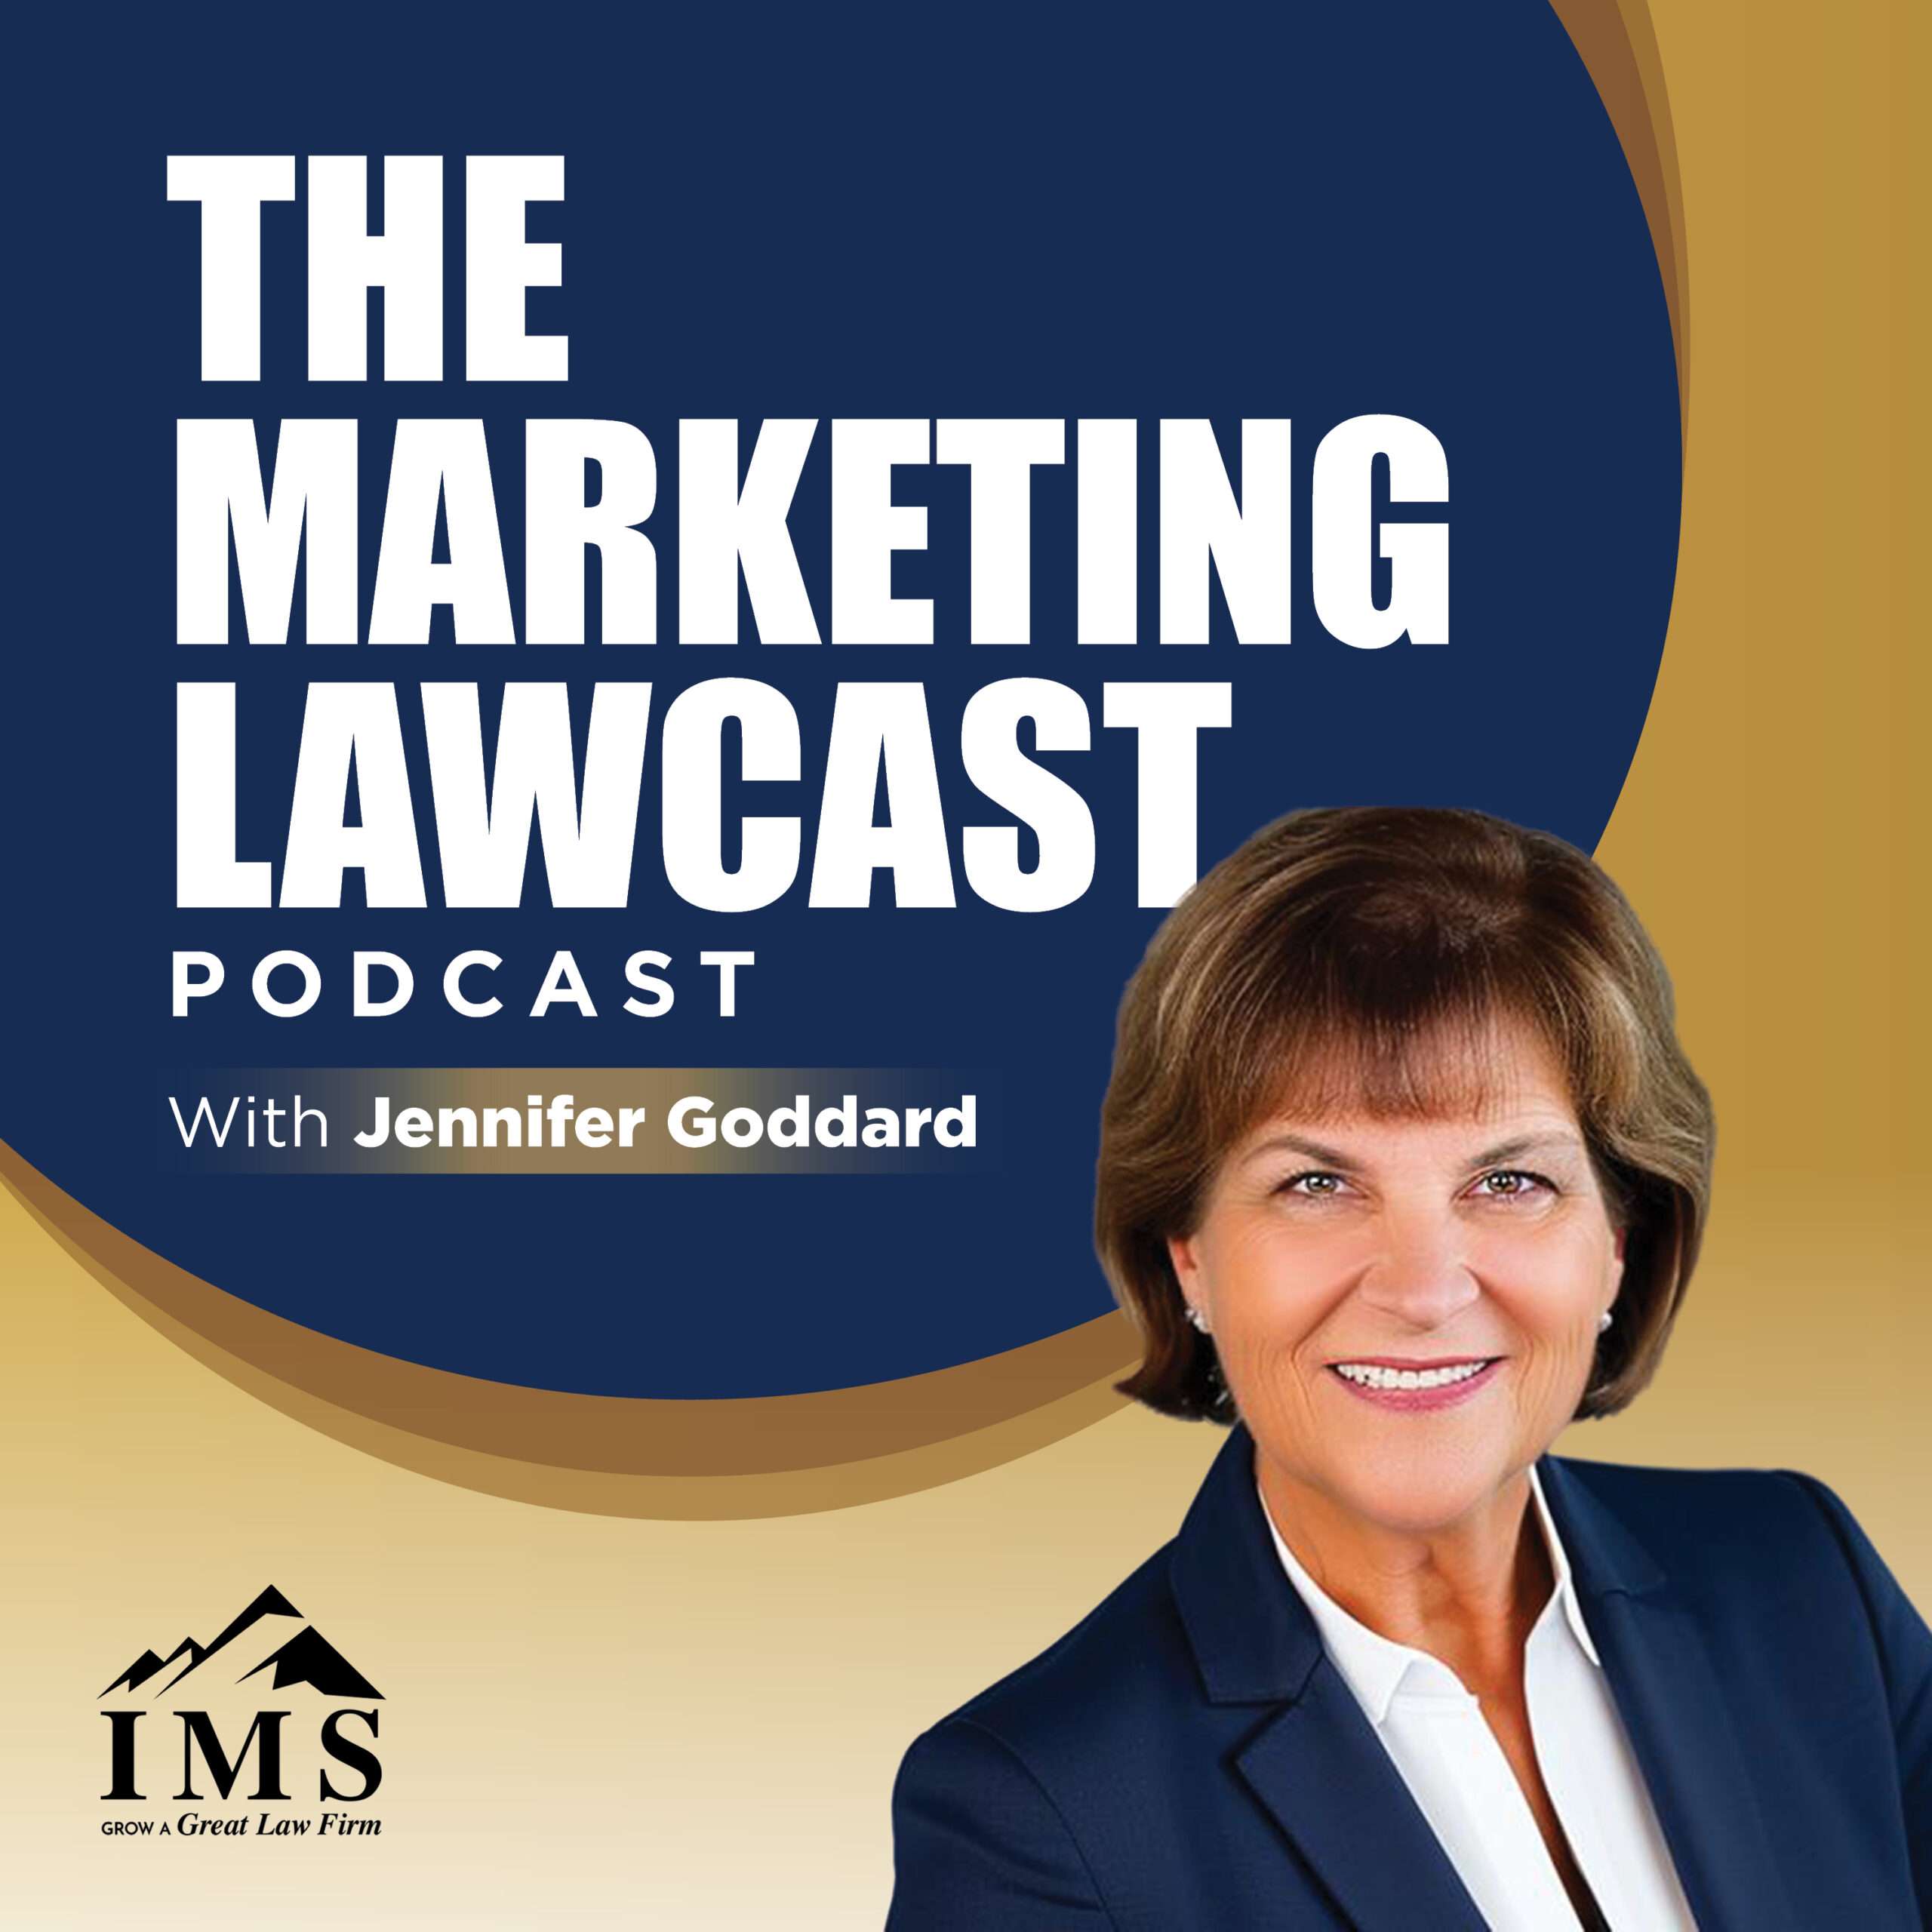 The Marketing Lawcast podcast